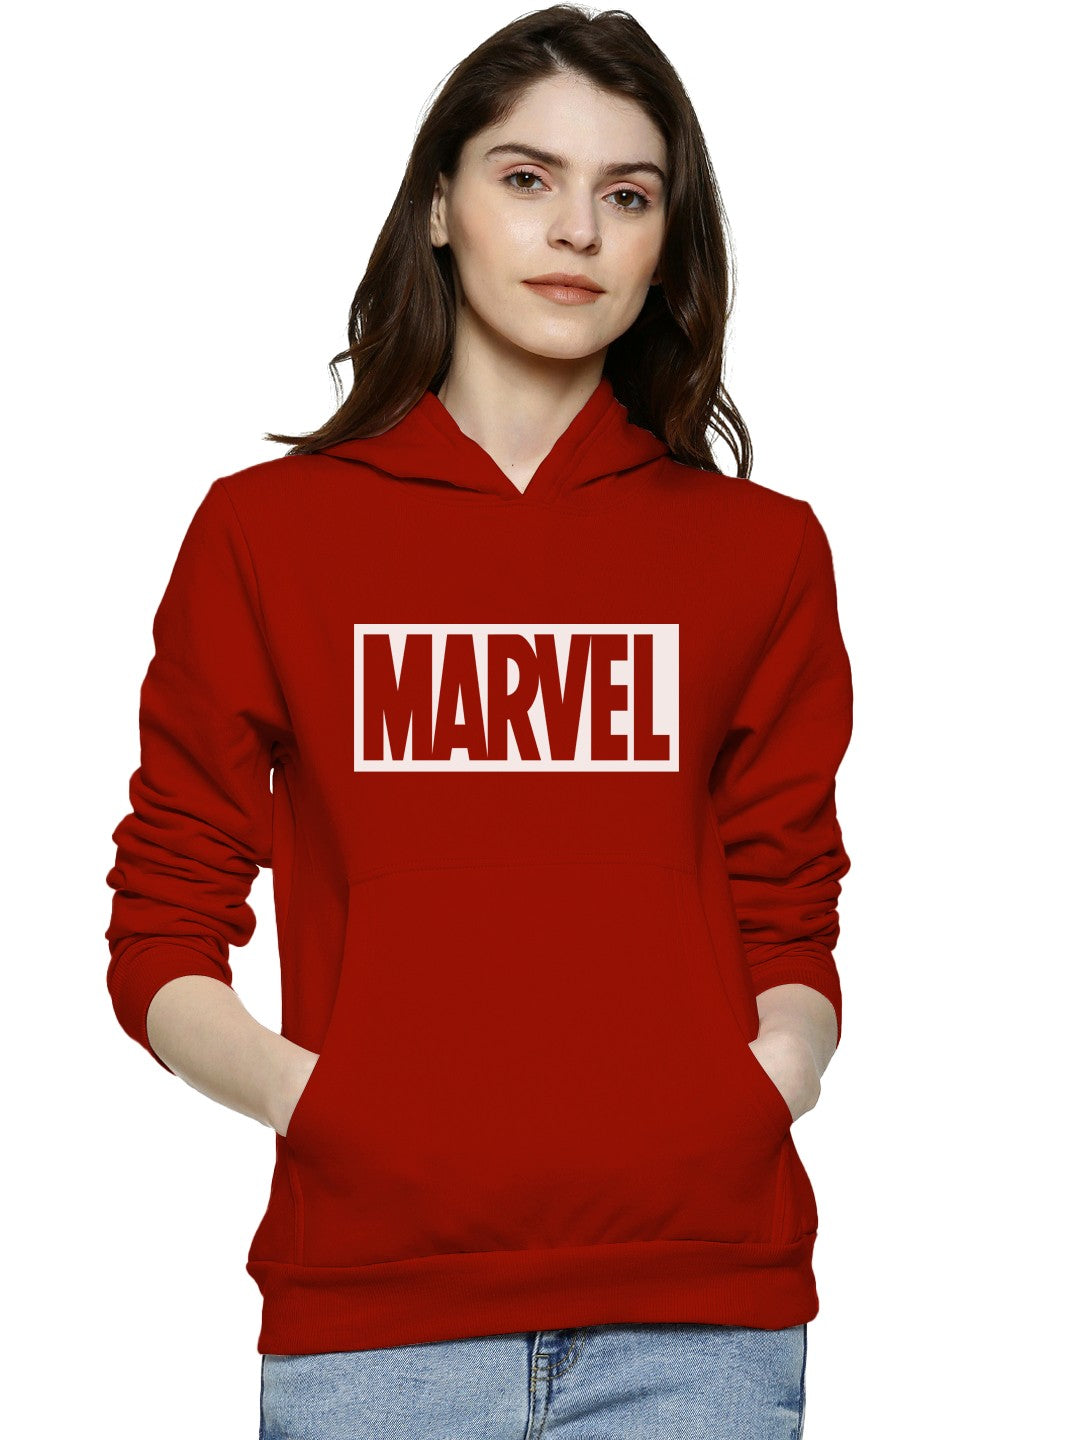 Marvel Printed Premium Quality Hoodie For Women